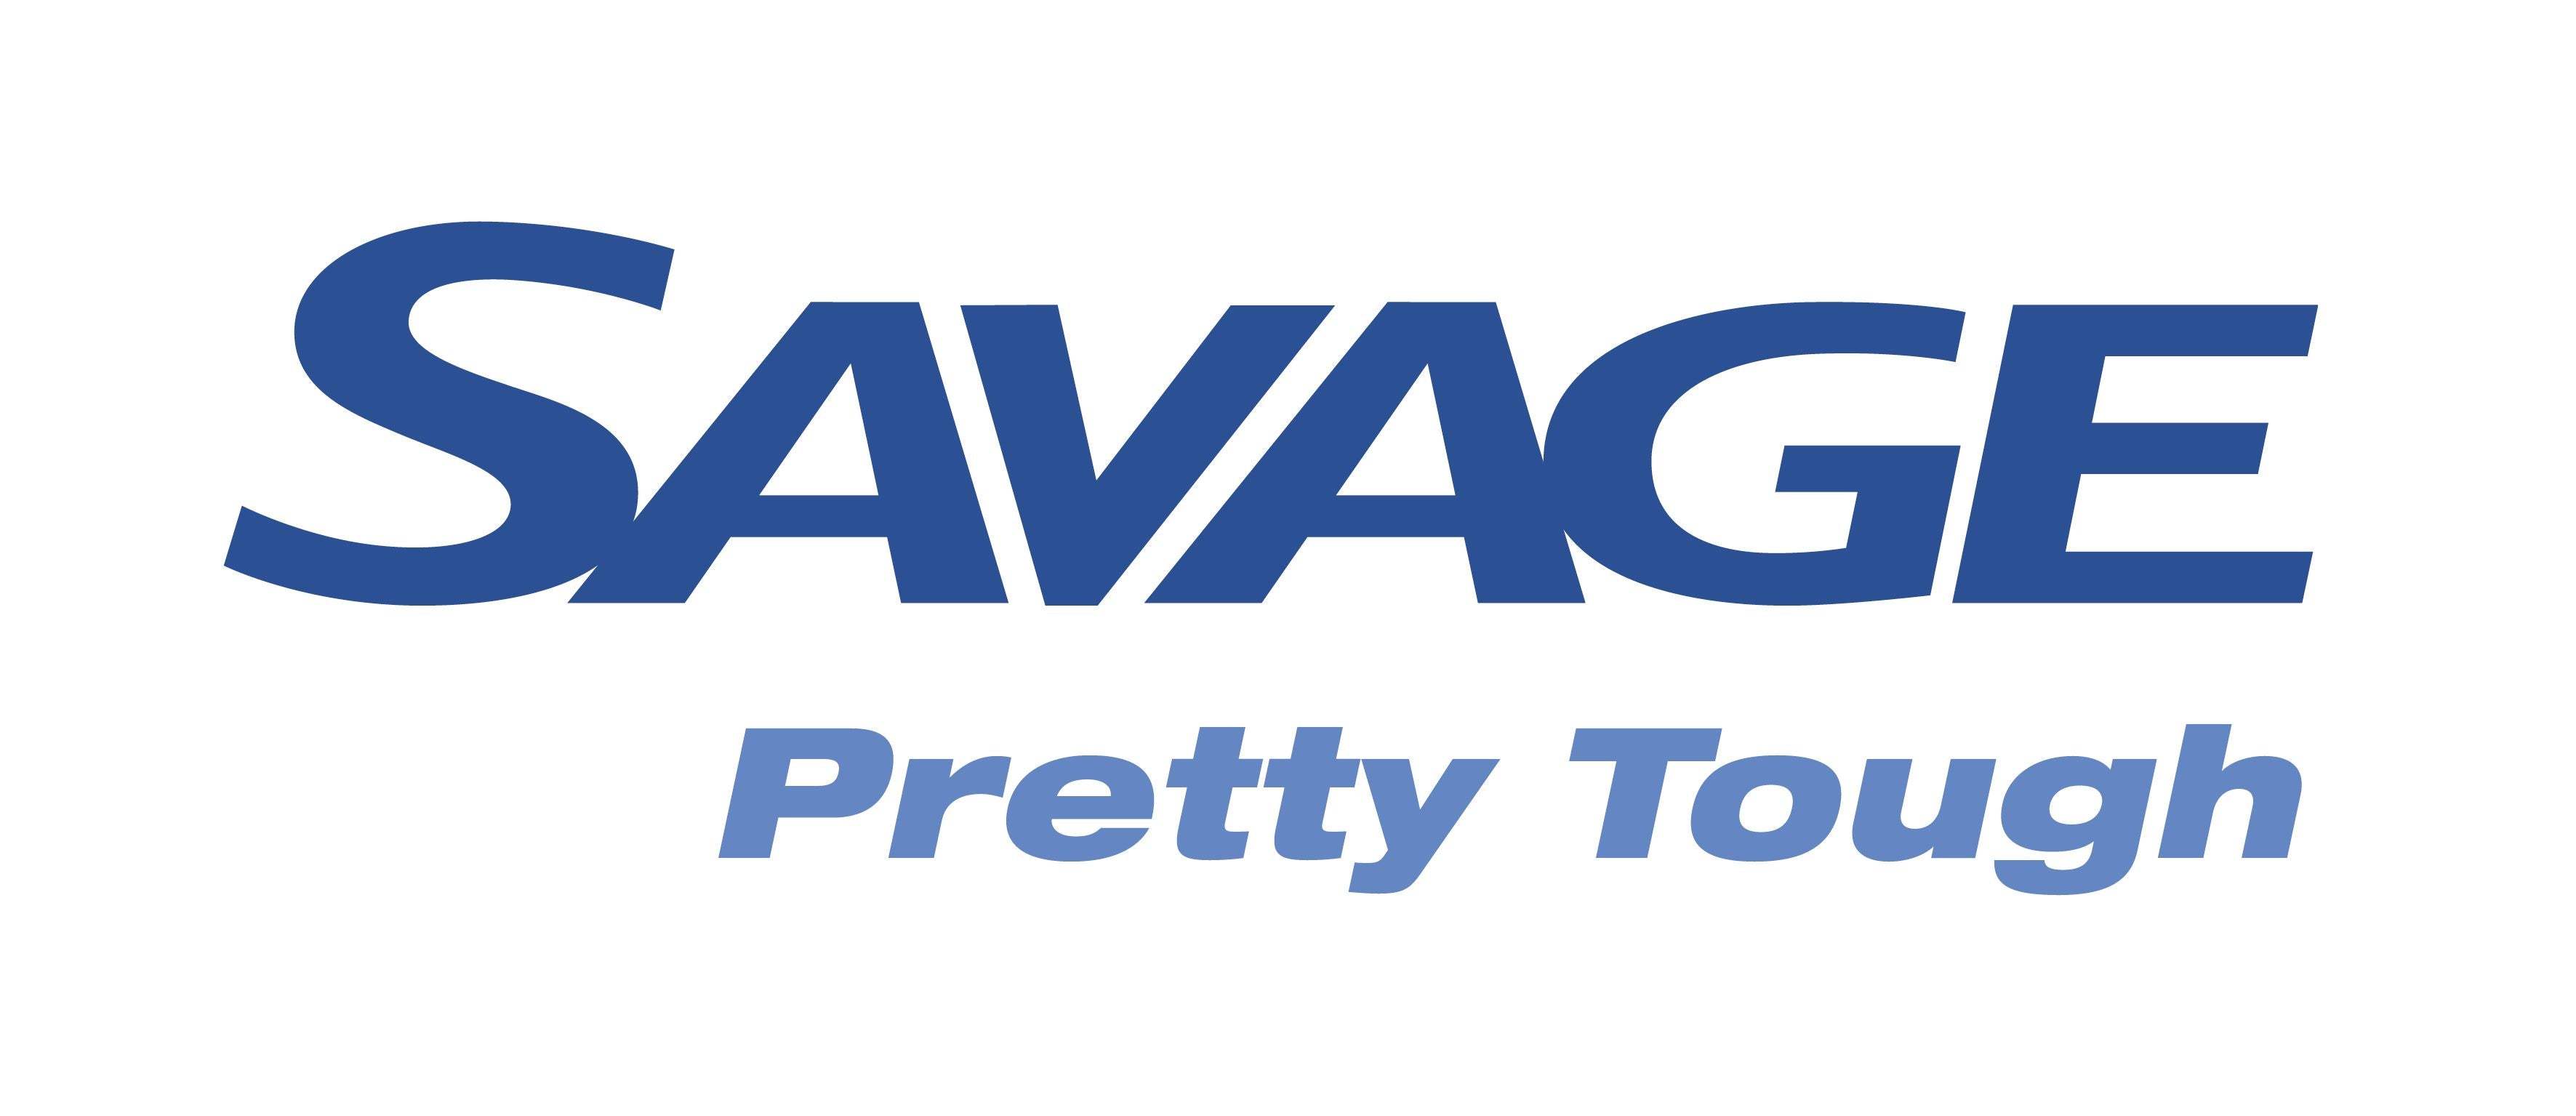 Savage 435 Bay Cruiser (IN STOCK)